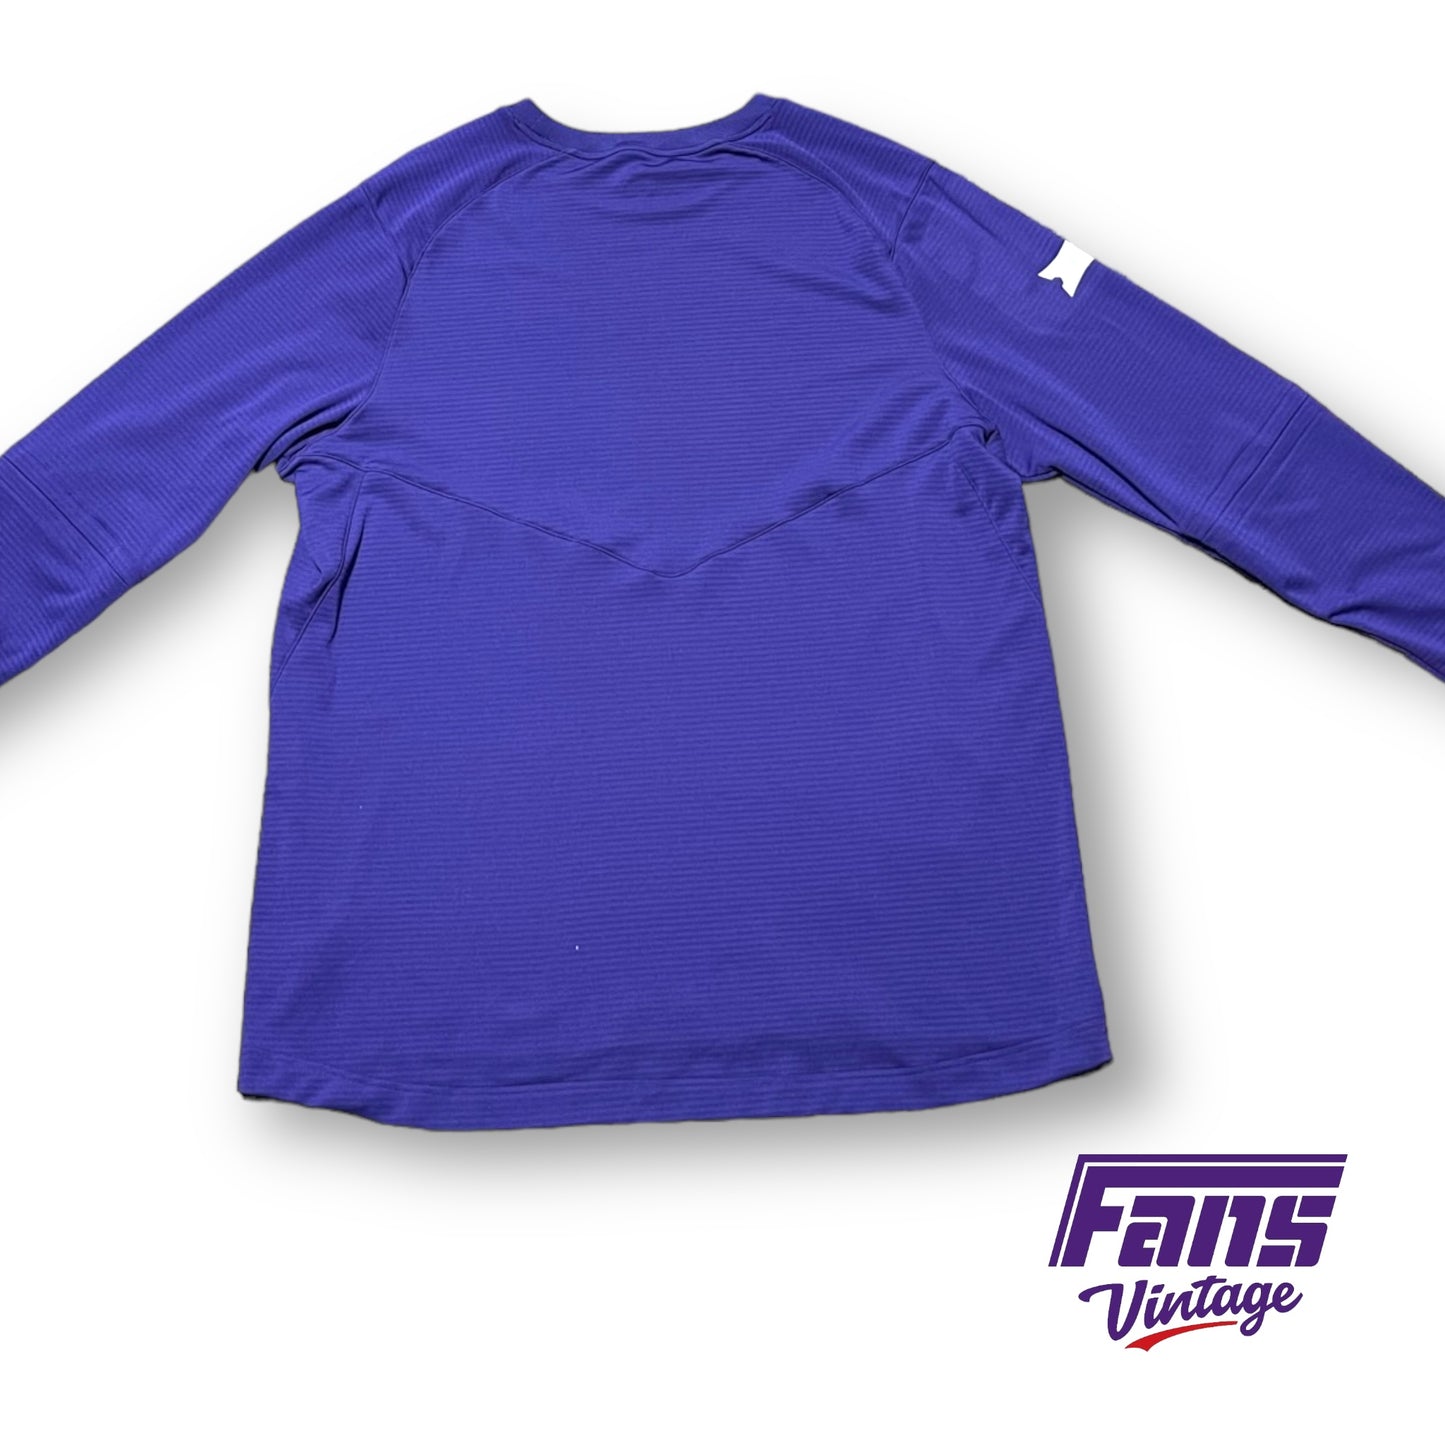 Nike Baseball TCU Team Issued Premium training shirt - Purple Long Sleeve with awesome weave pattern!